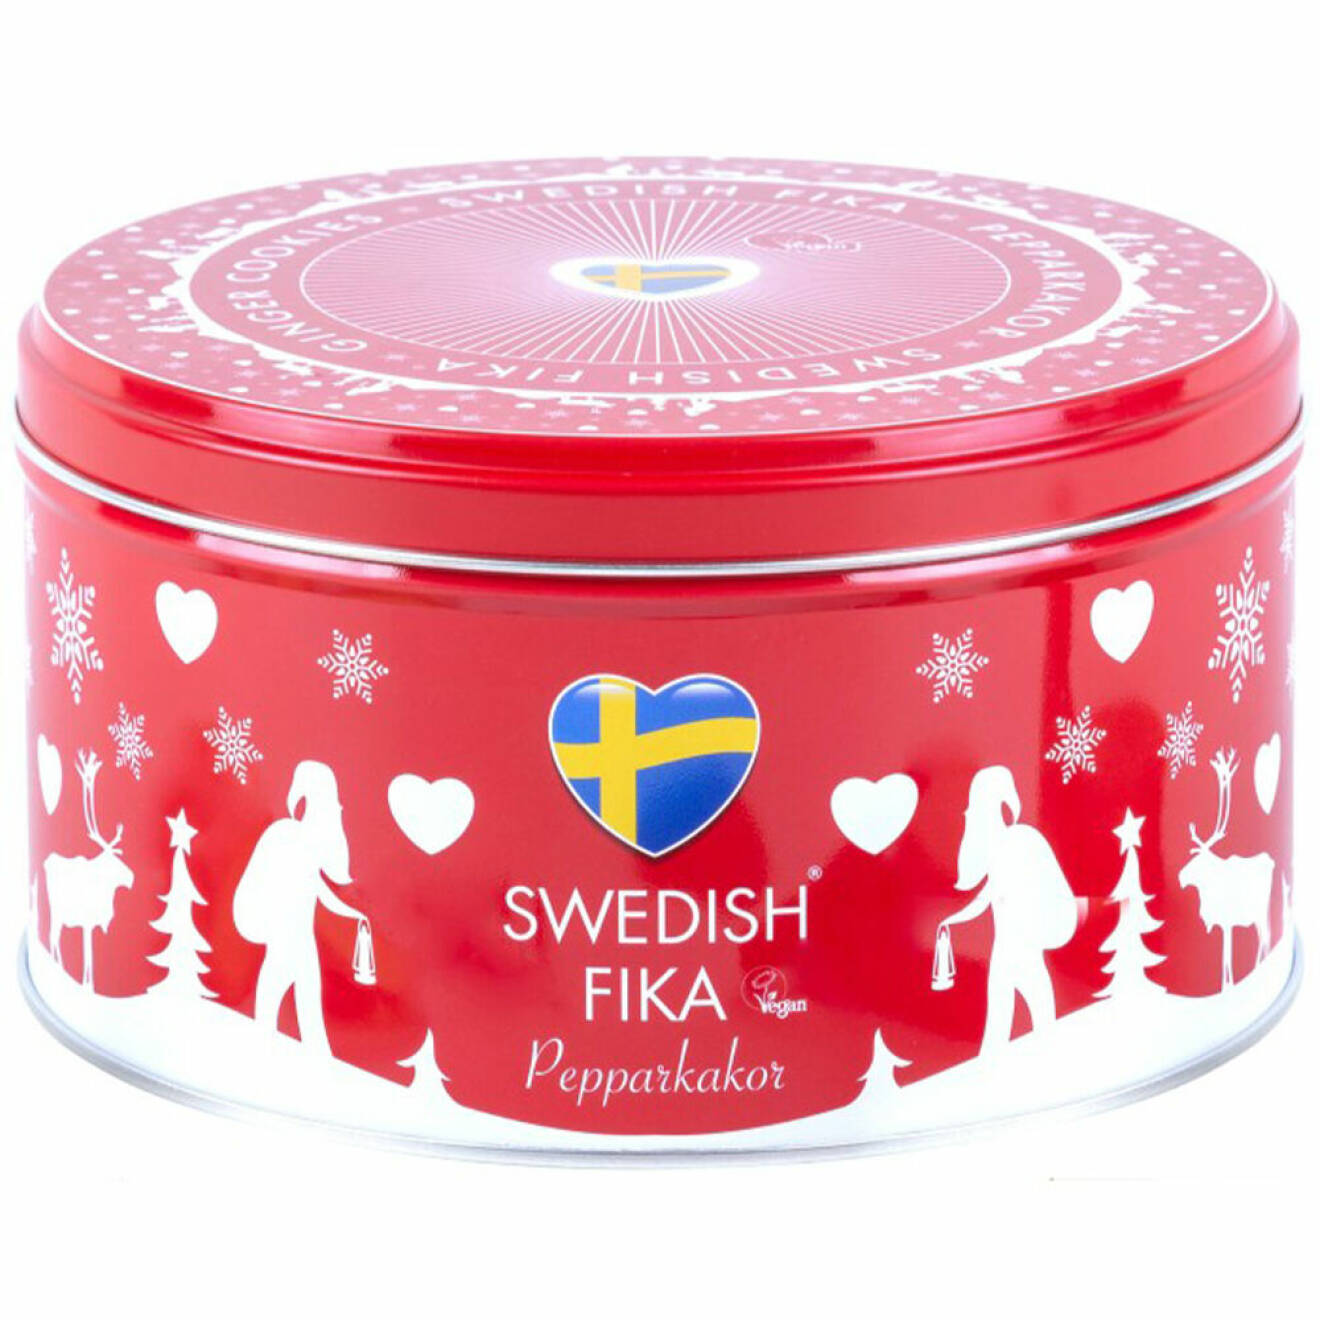 Swedish fika pepparkakor, 69 kr/300 g.